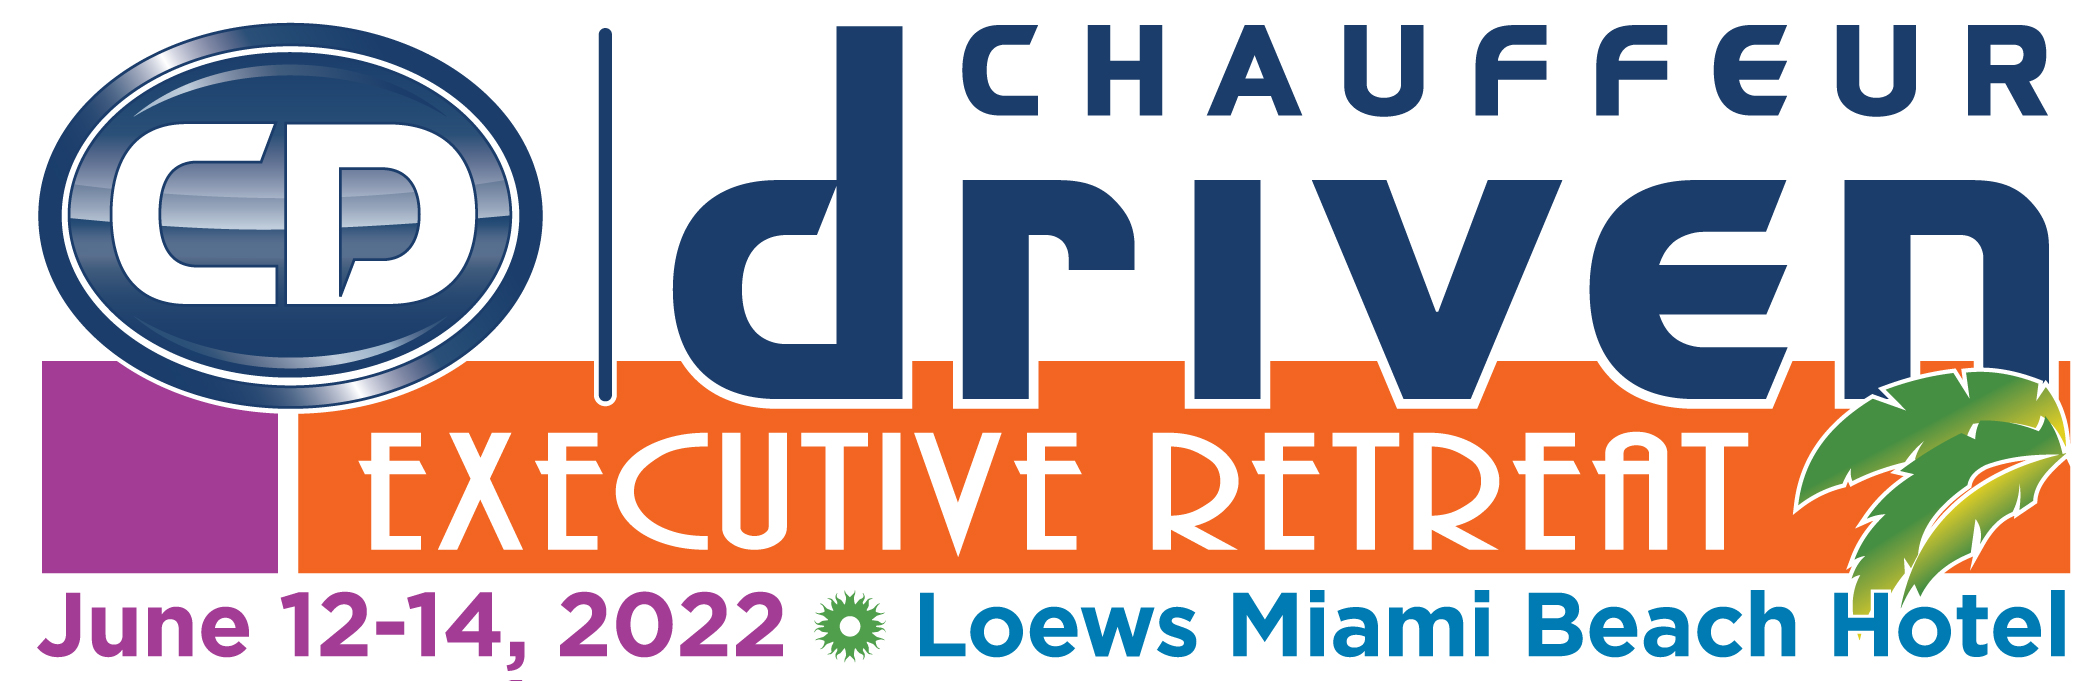 CD Executive Retreat Miami 2022